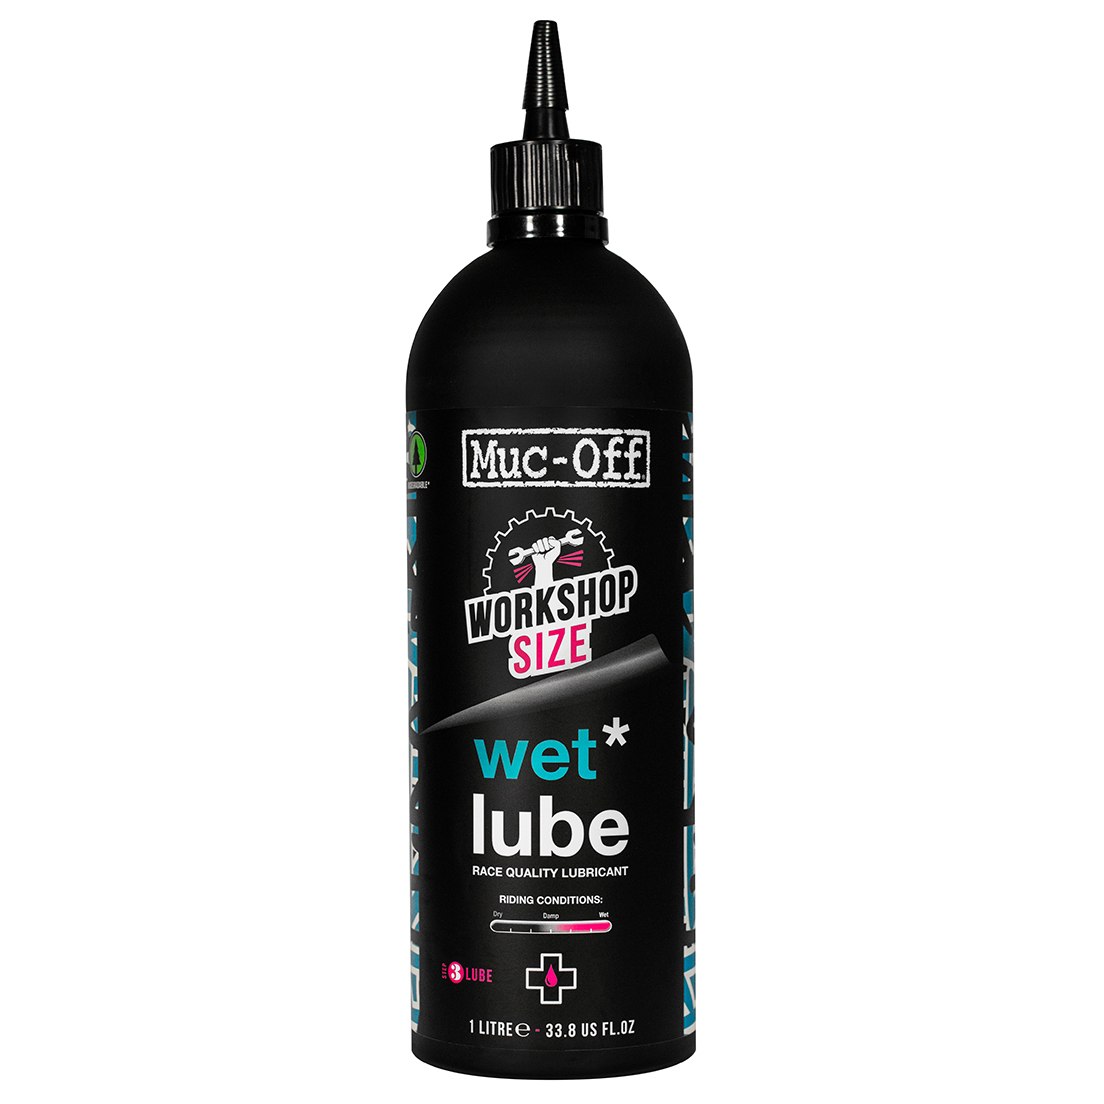 Productfoto van Muc-Off Wet Lube Lubricant - 1 Liter